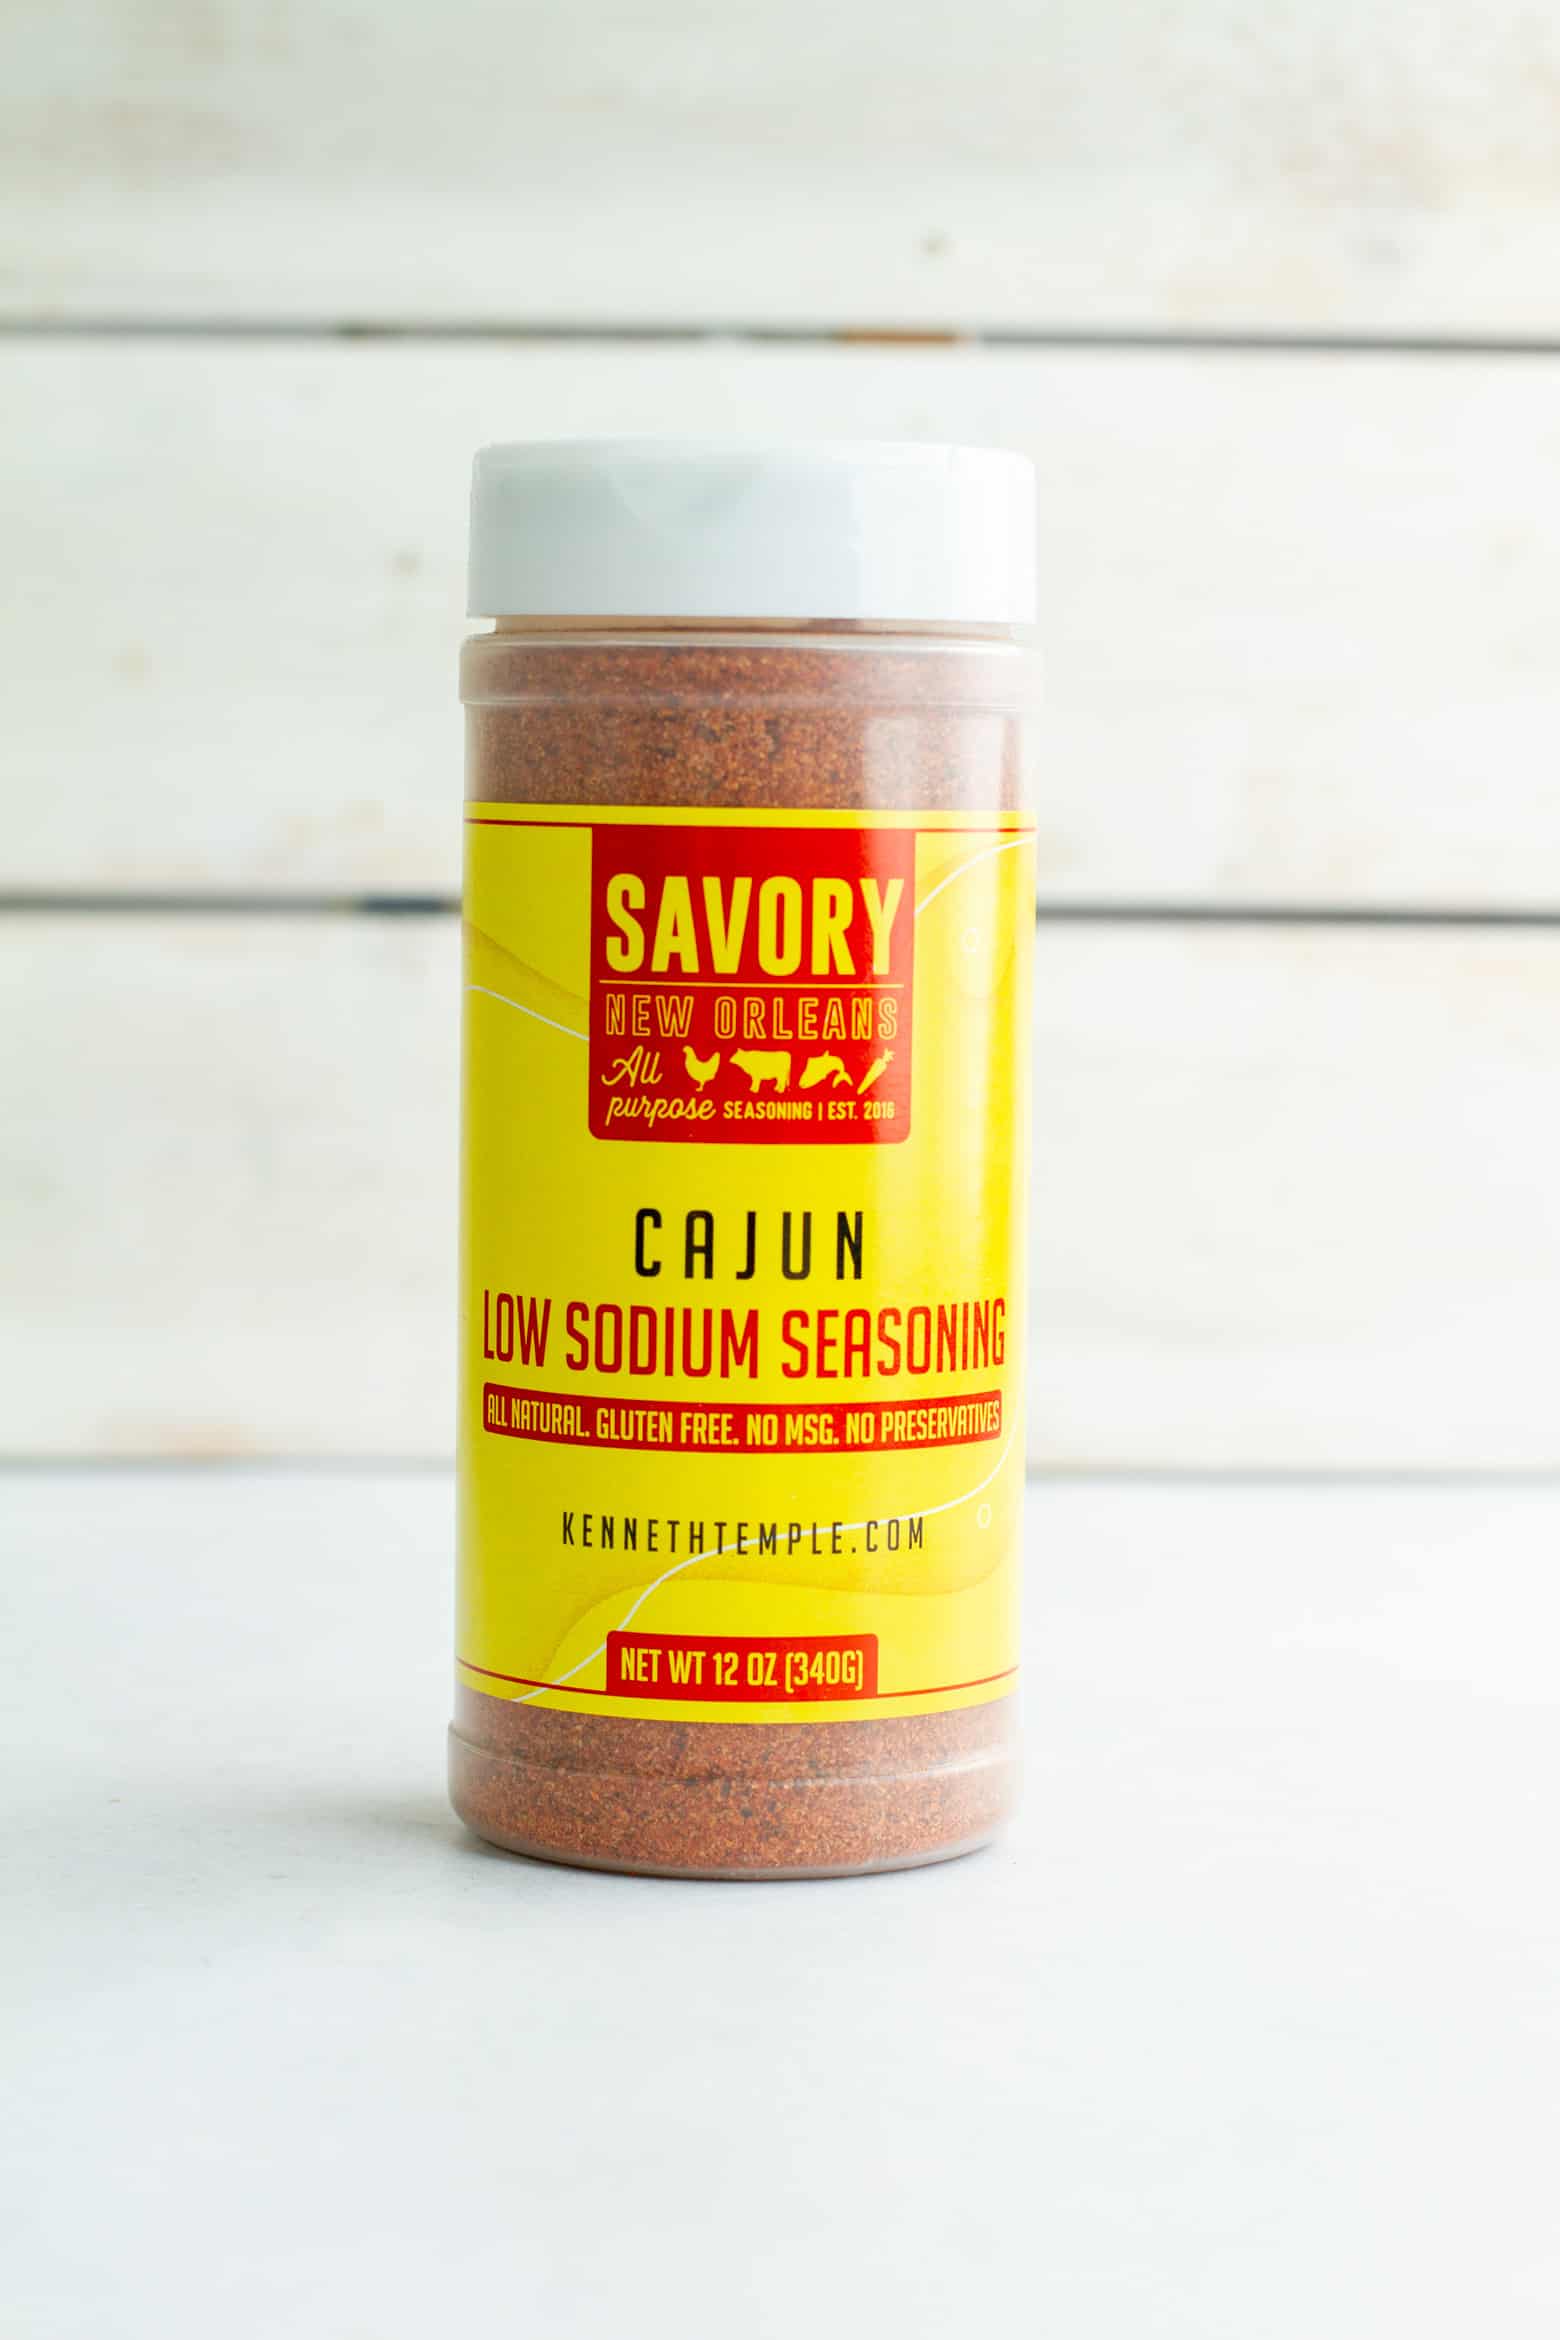 https://kennethtemple.com/wp-content/uploads/2020/08/Savory-Cajun-Seasoning.jpg